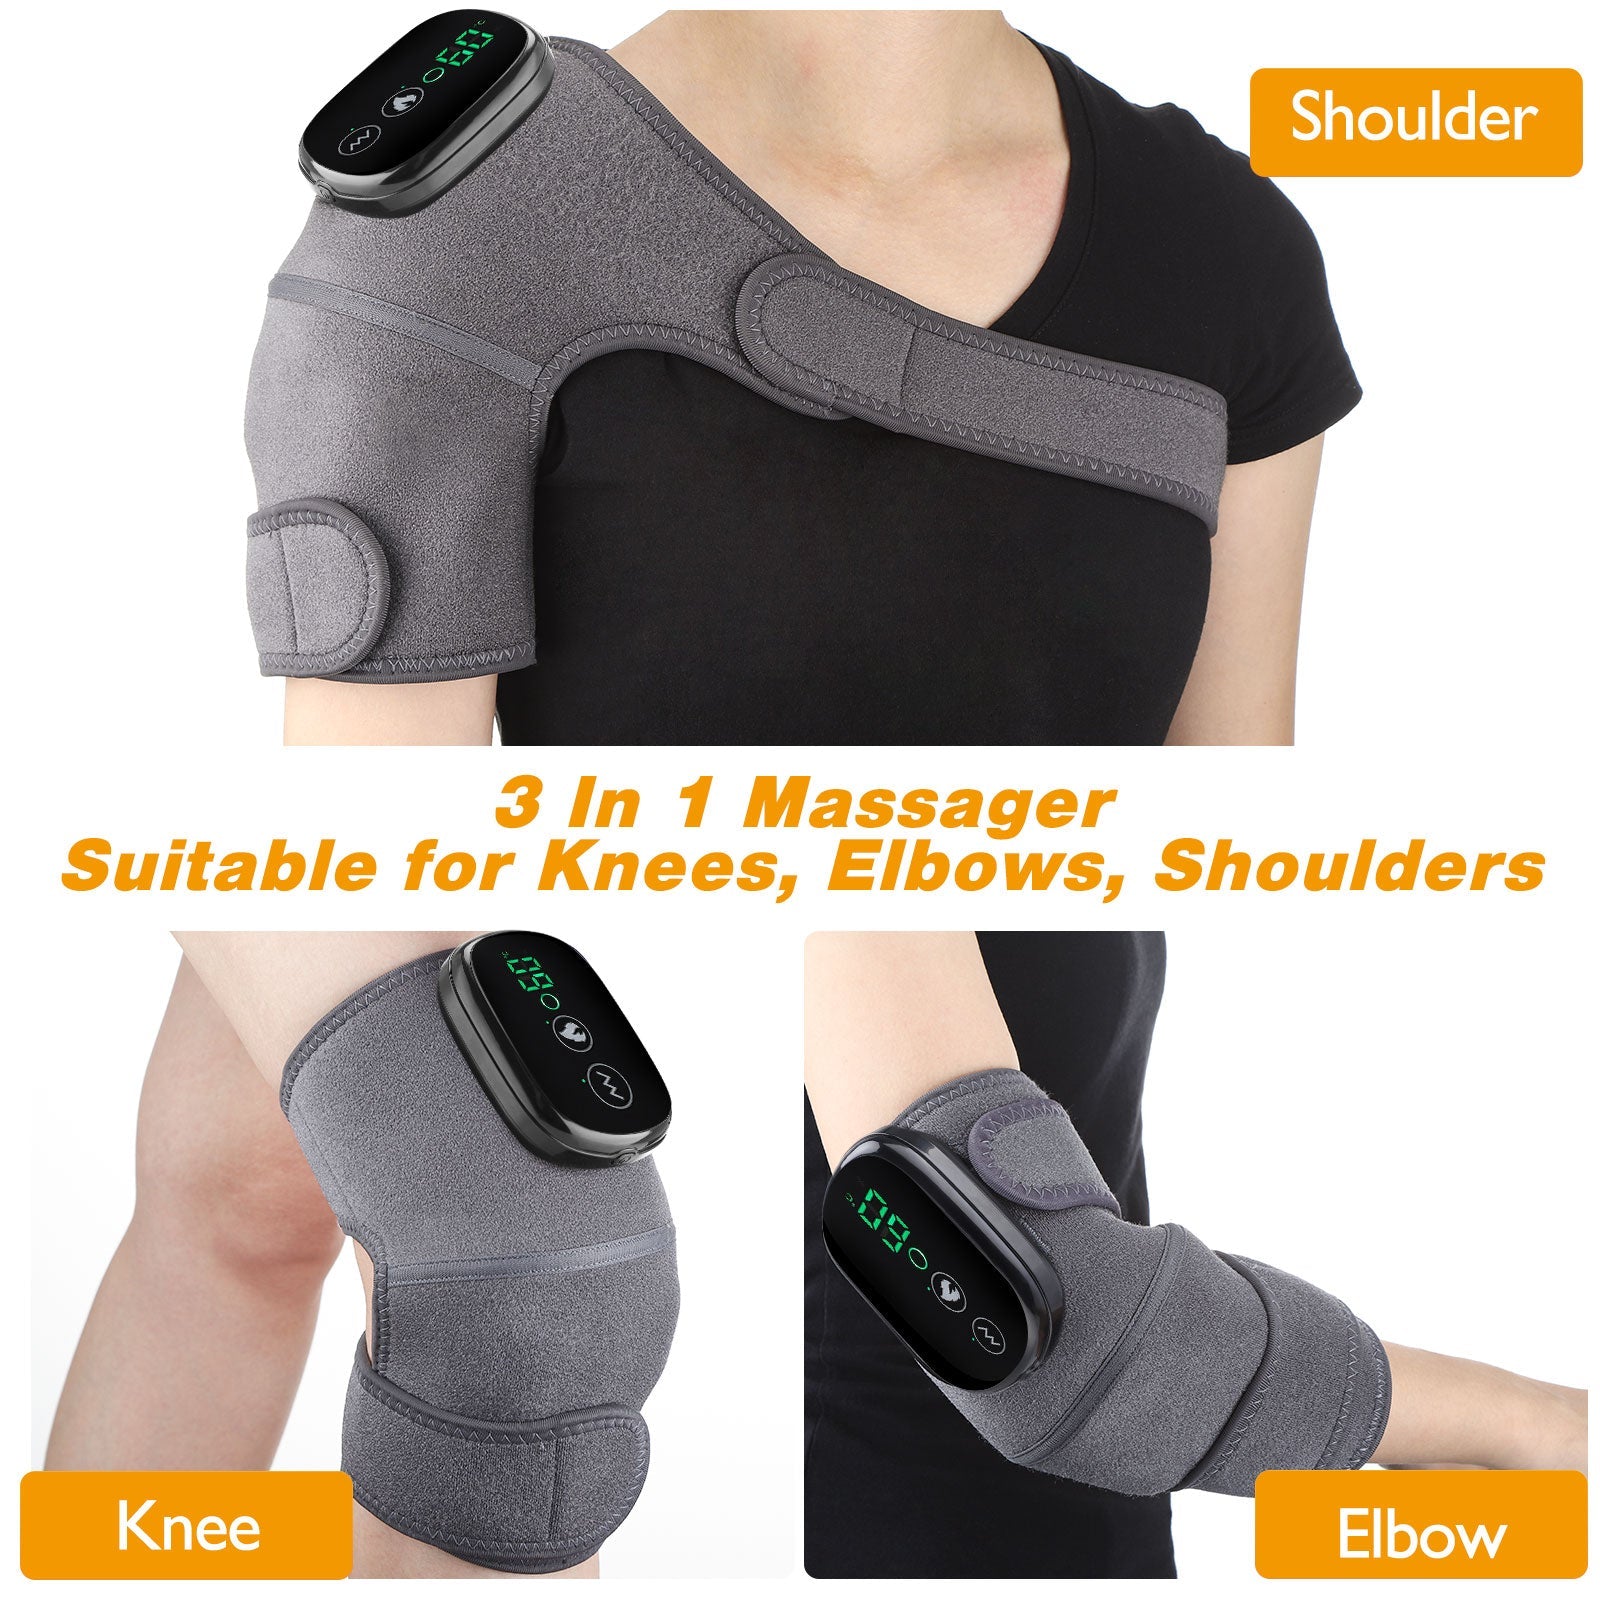 Electric Heated Shoulder Massager